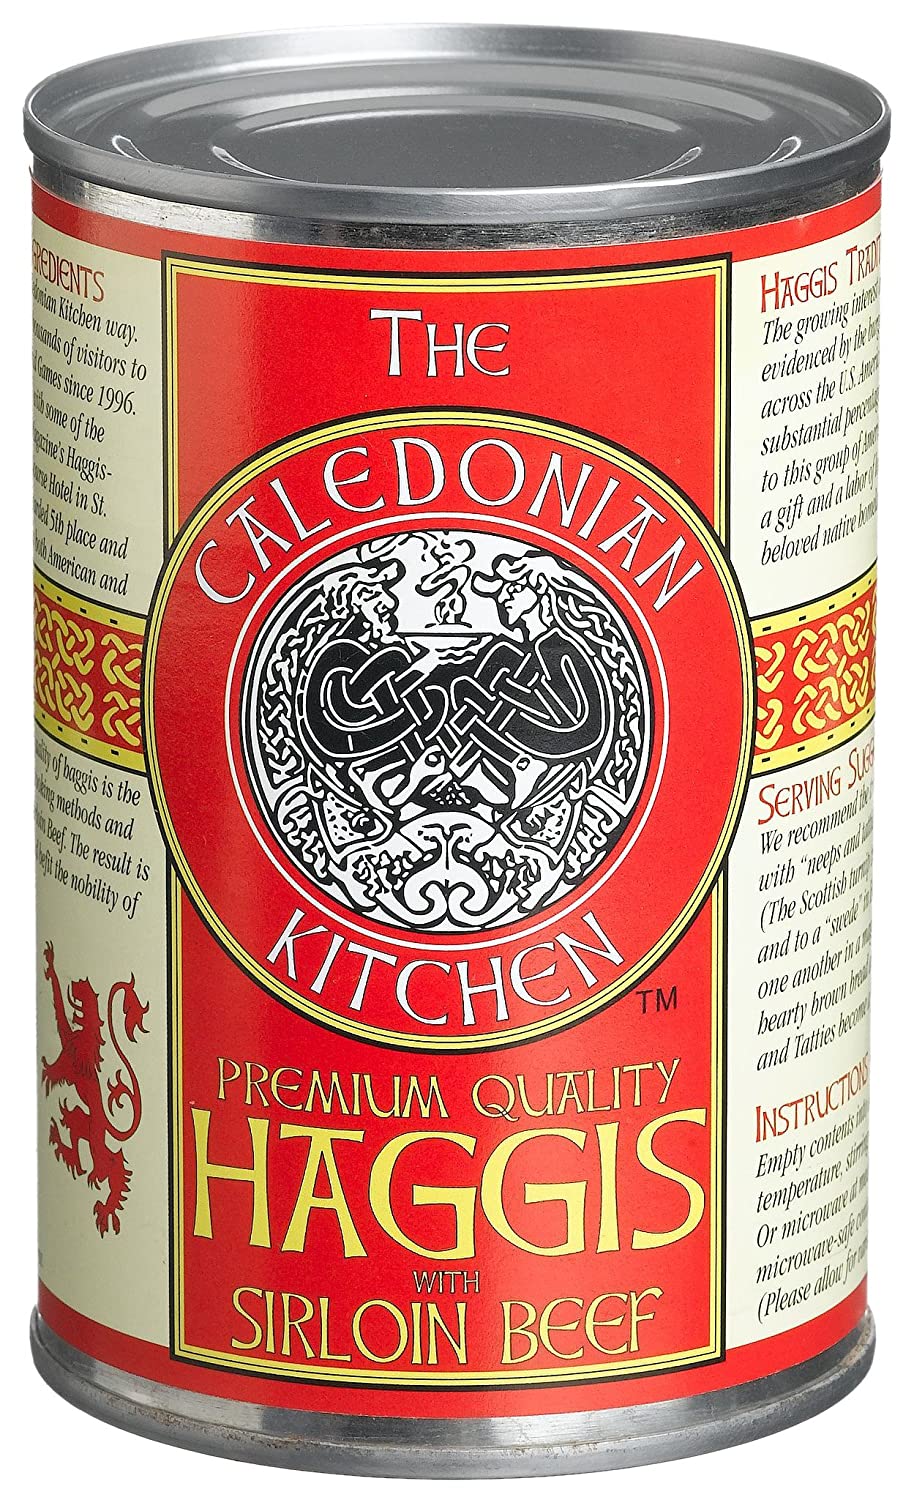 Sirloin Beef Haggis - The Caledonian Kitchen